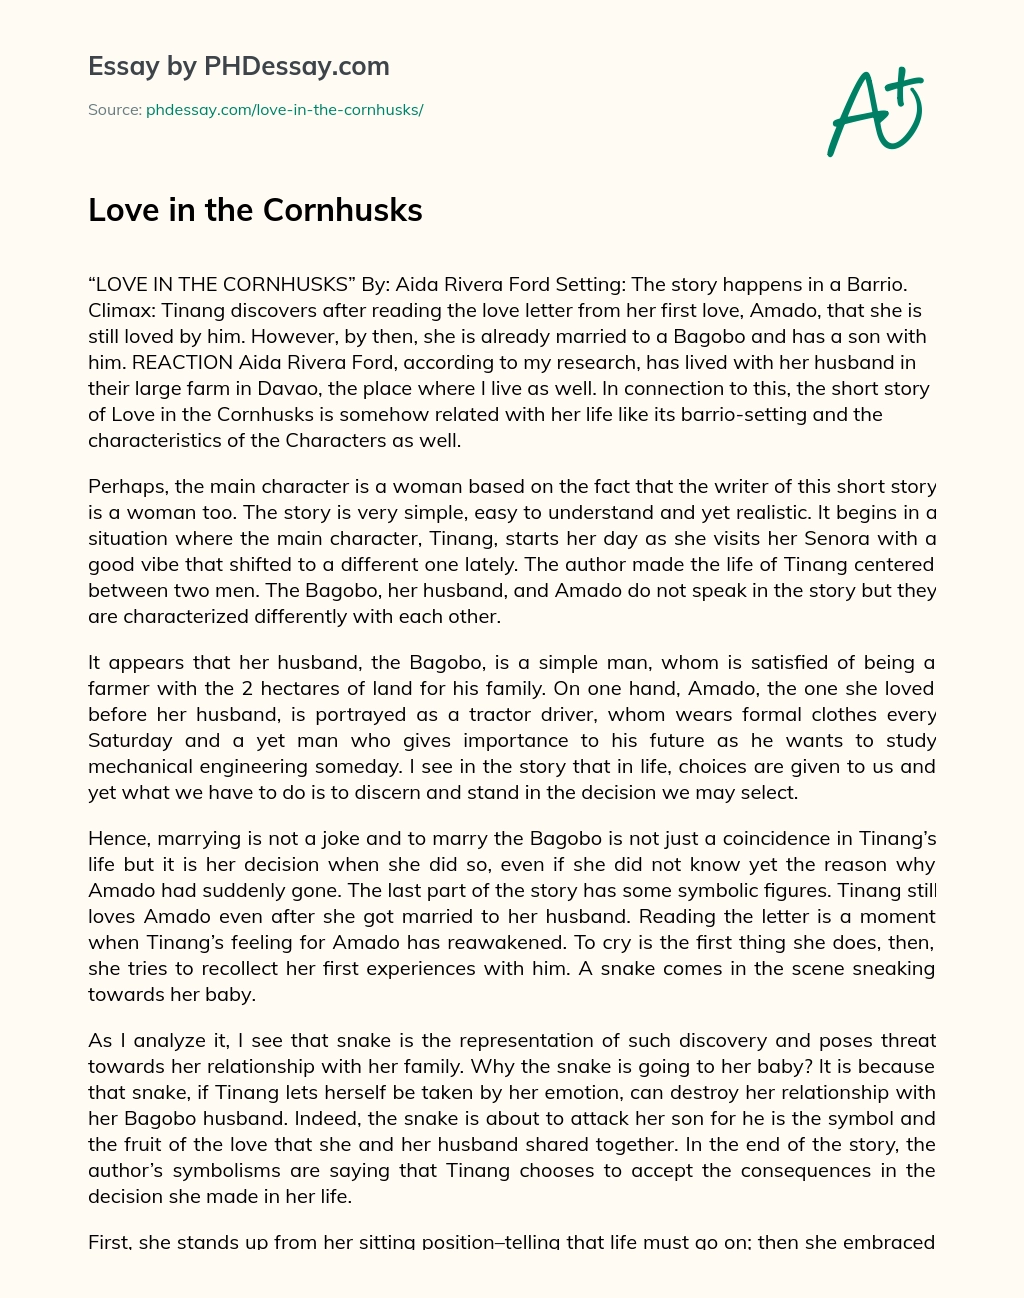 Love in the Cornhusks essay